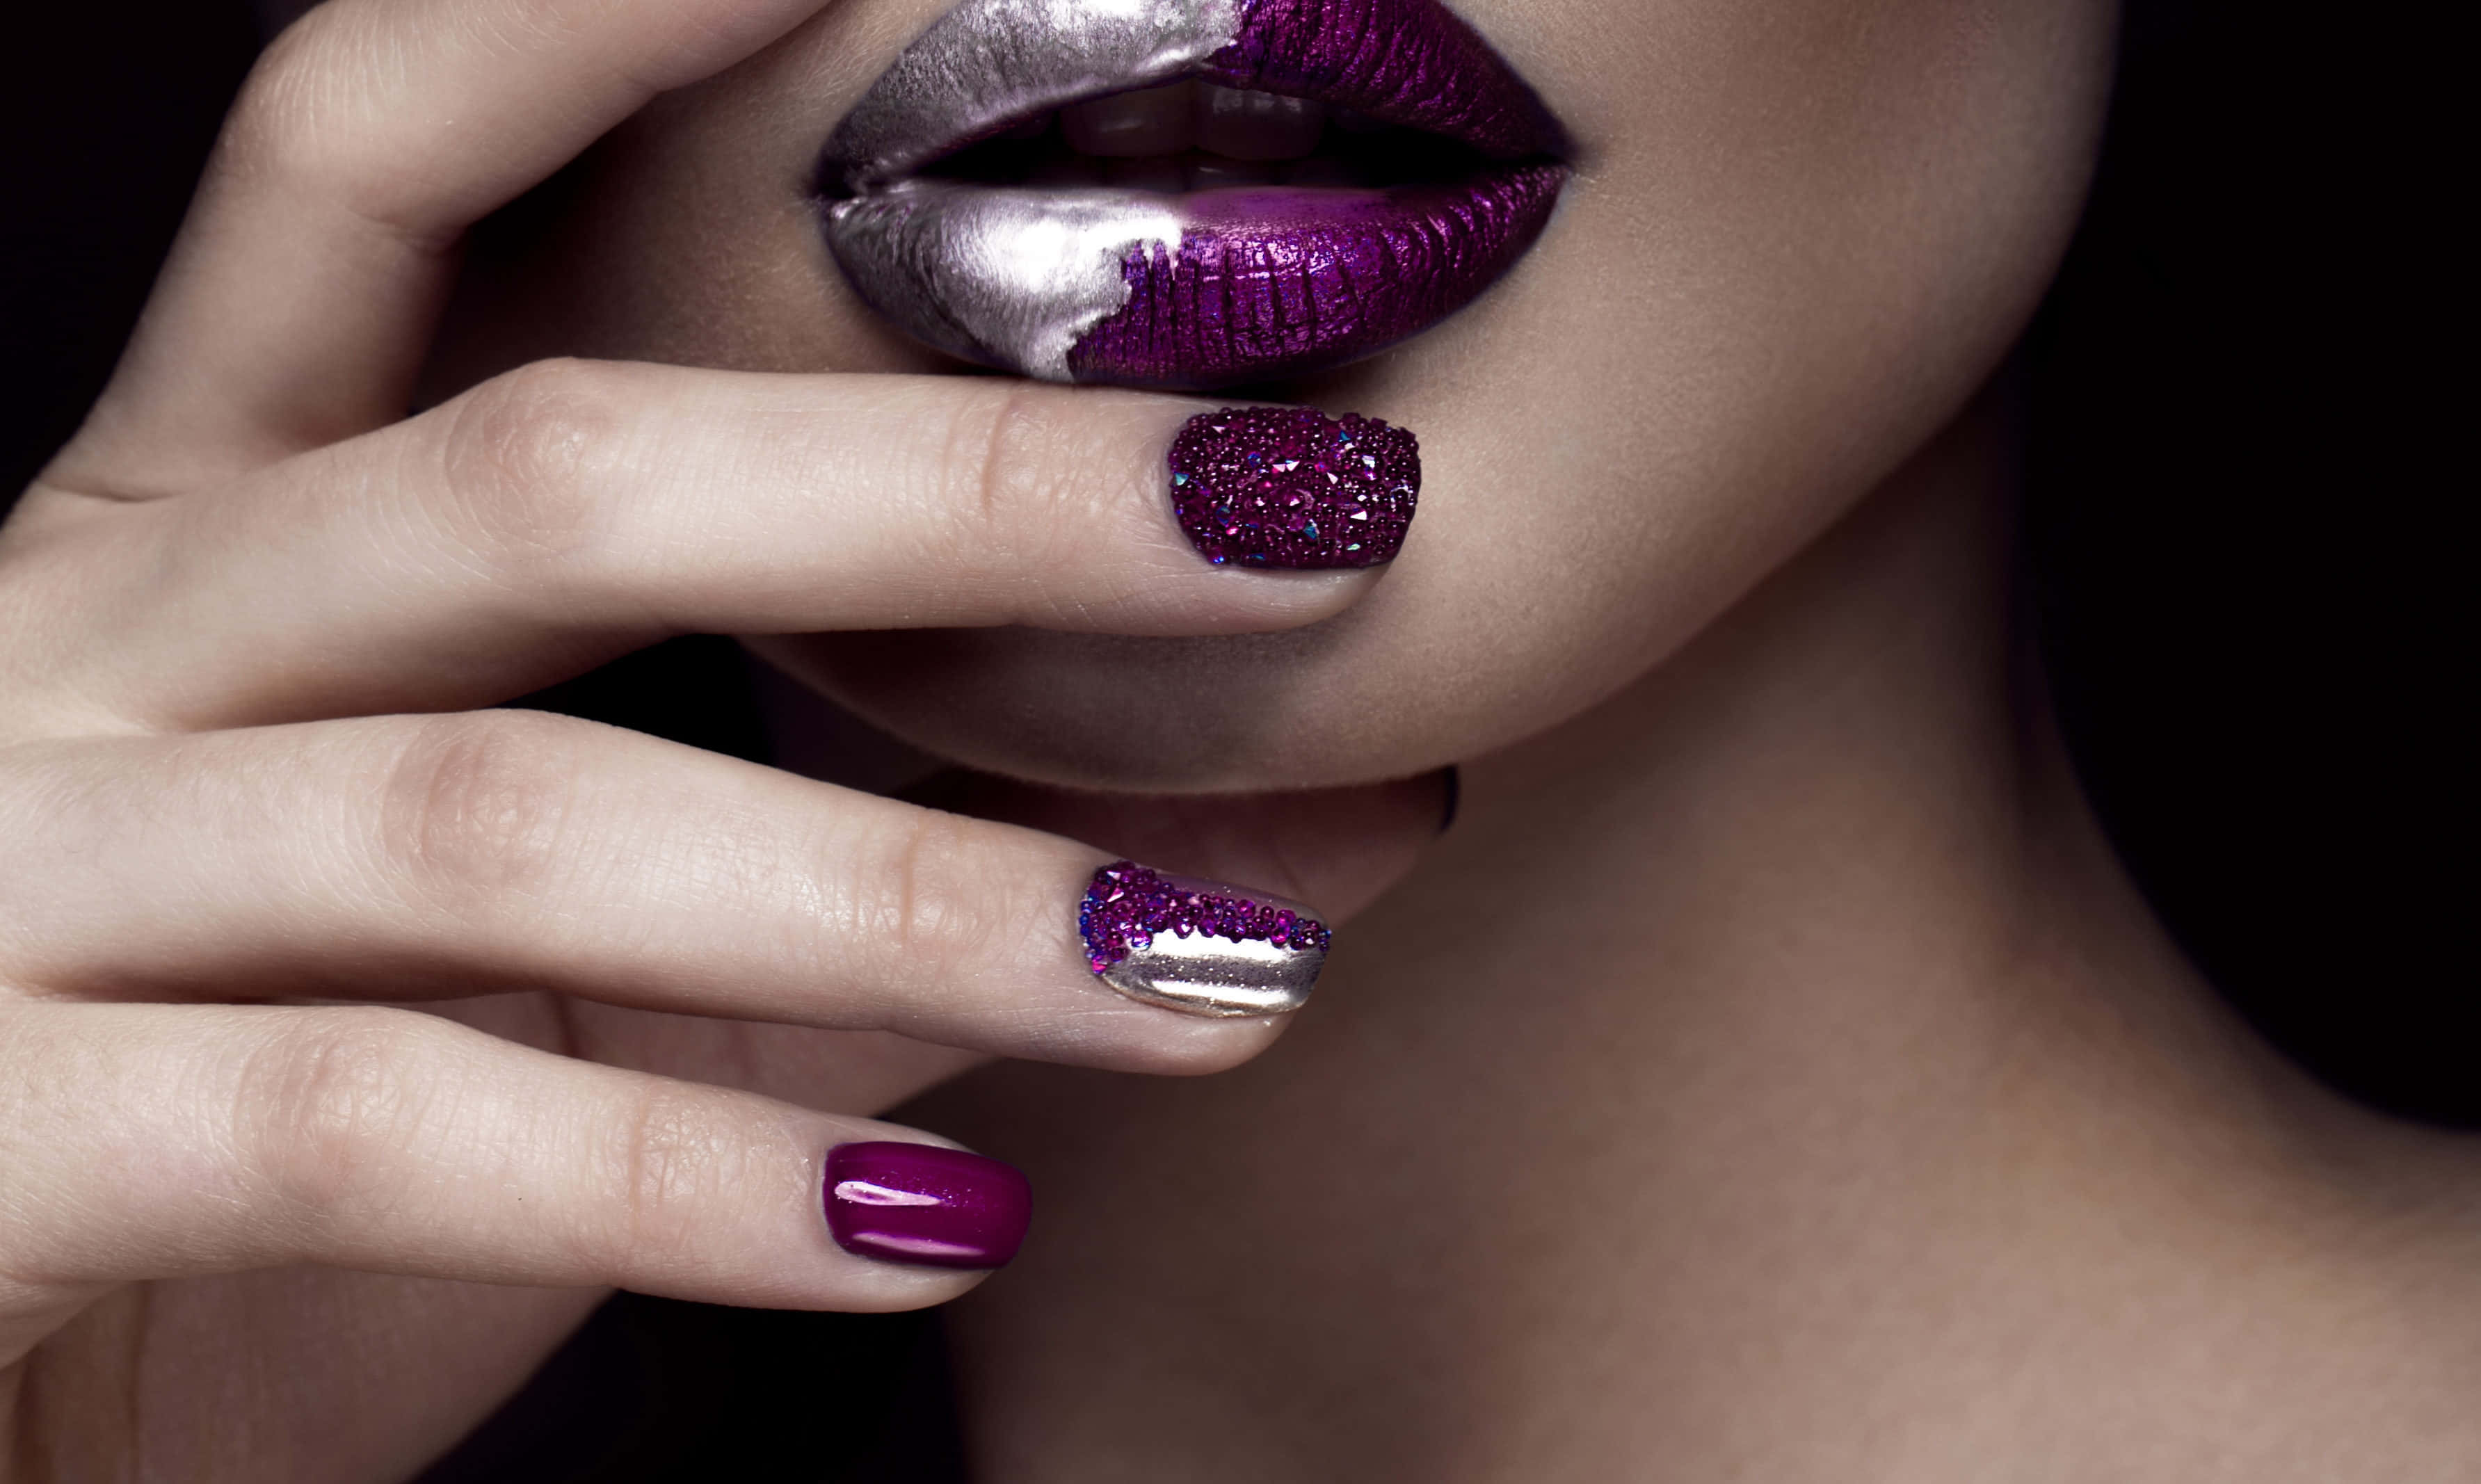 Shades of purple - sparkling lips! Wallpaper